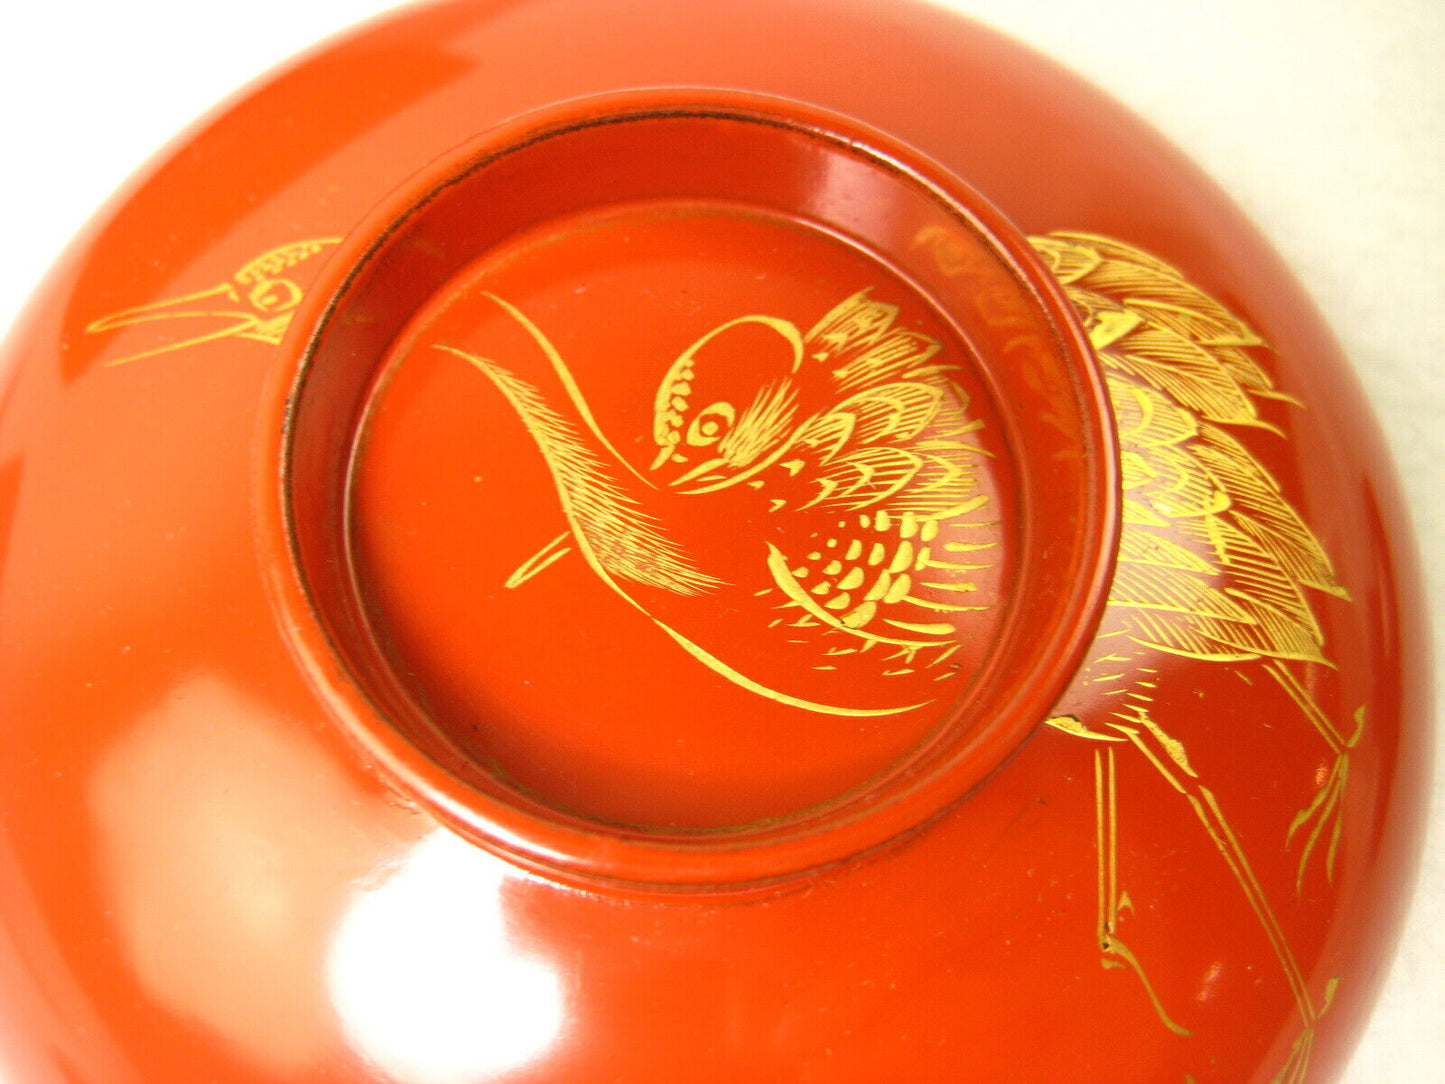 Antique Japanese Meiji Era (C1890) Pair Of Red Lacquer Bowls W/ Gold Cranes